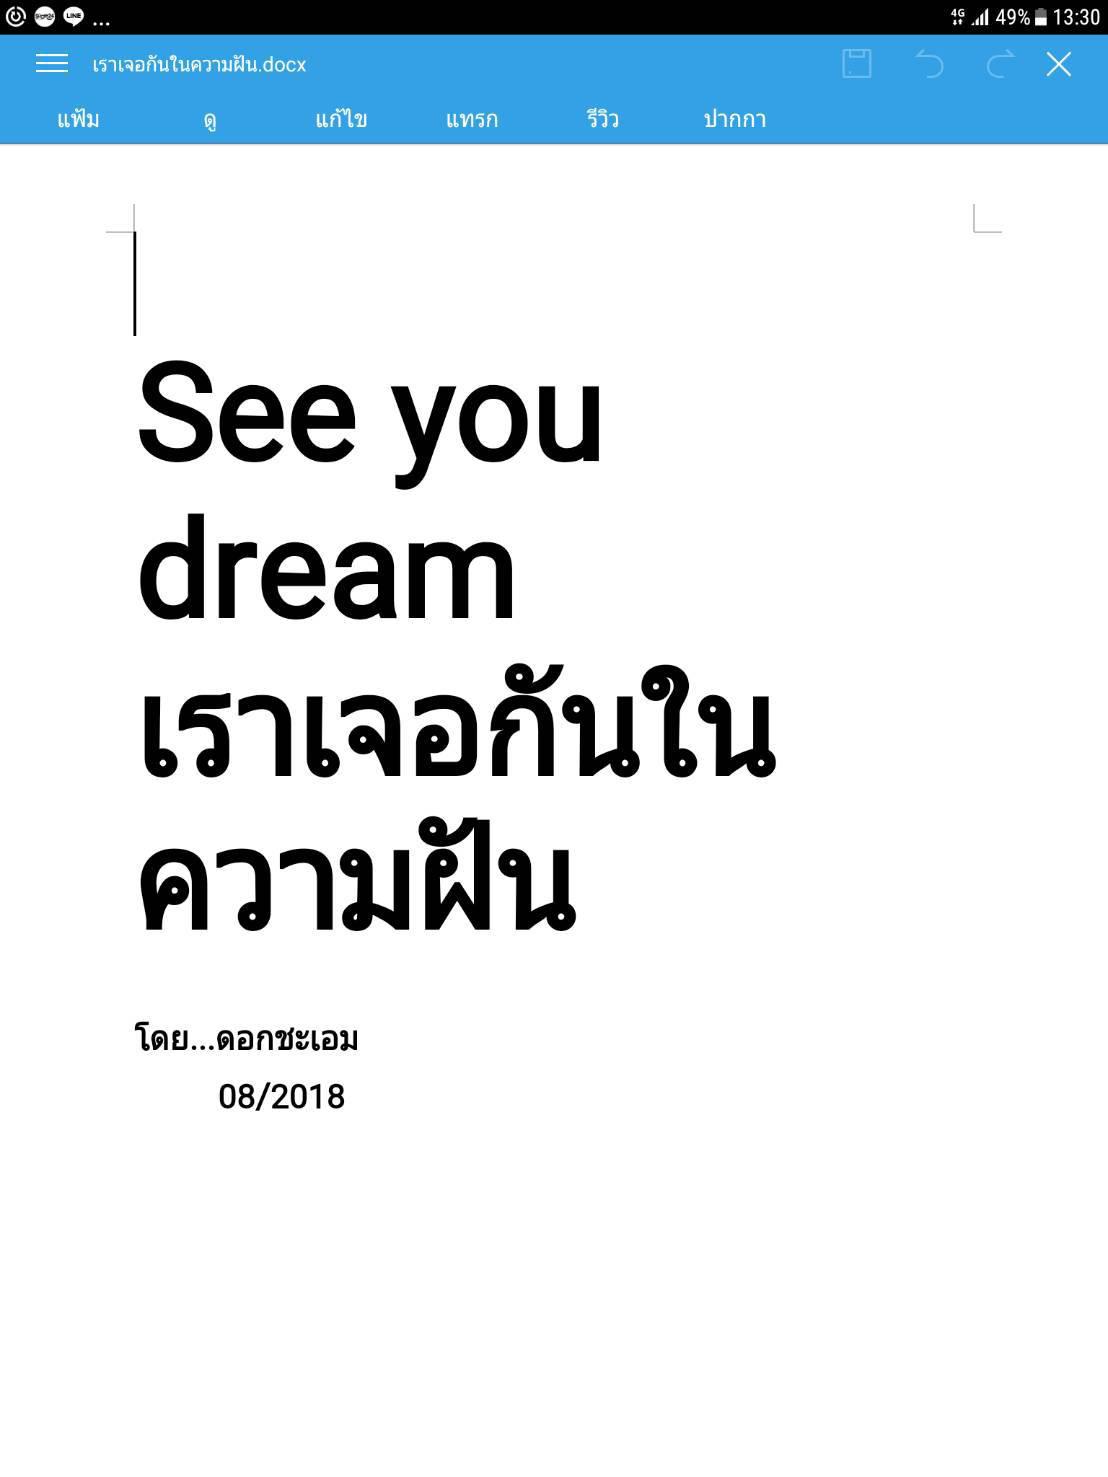 See You Dream เราพบกันในความฝัน - Pantip